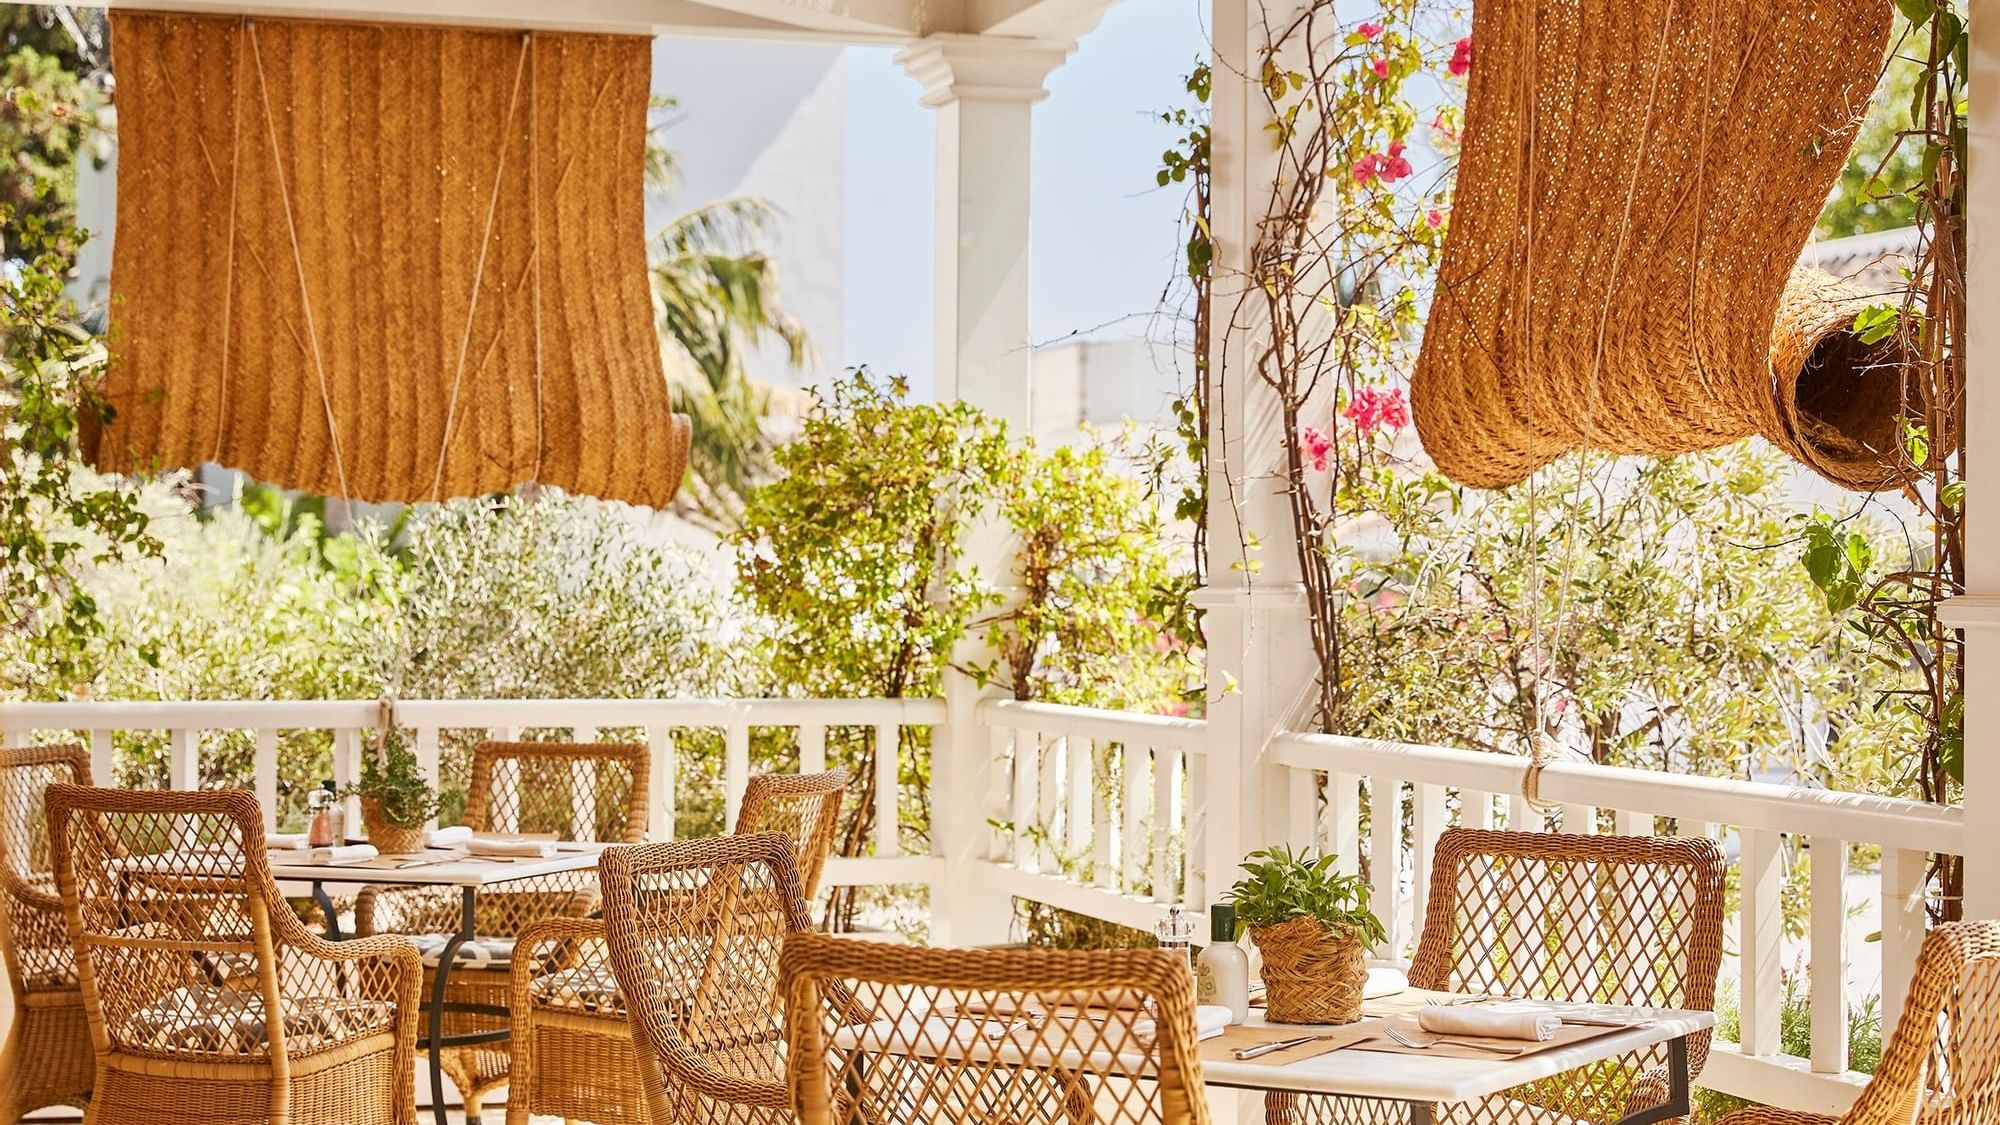 El Olivar's dining area on the terrace at Marbella Club Hotel